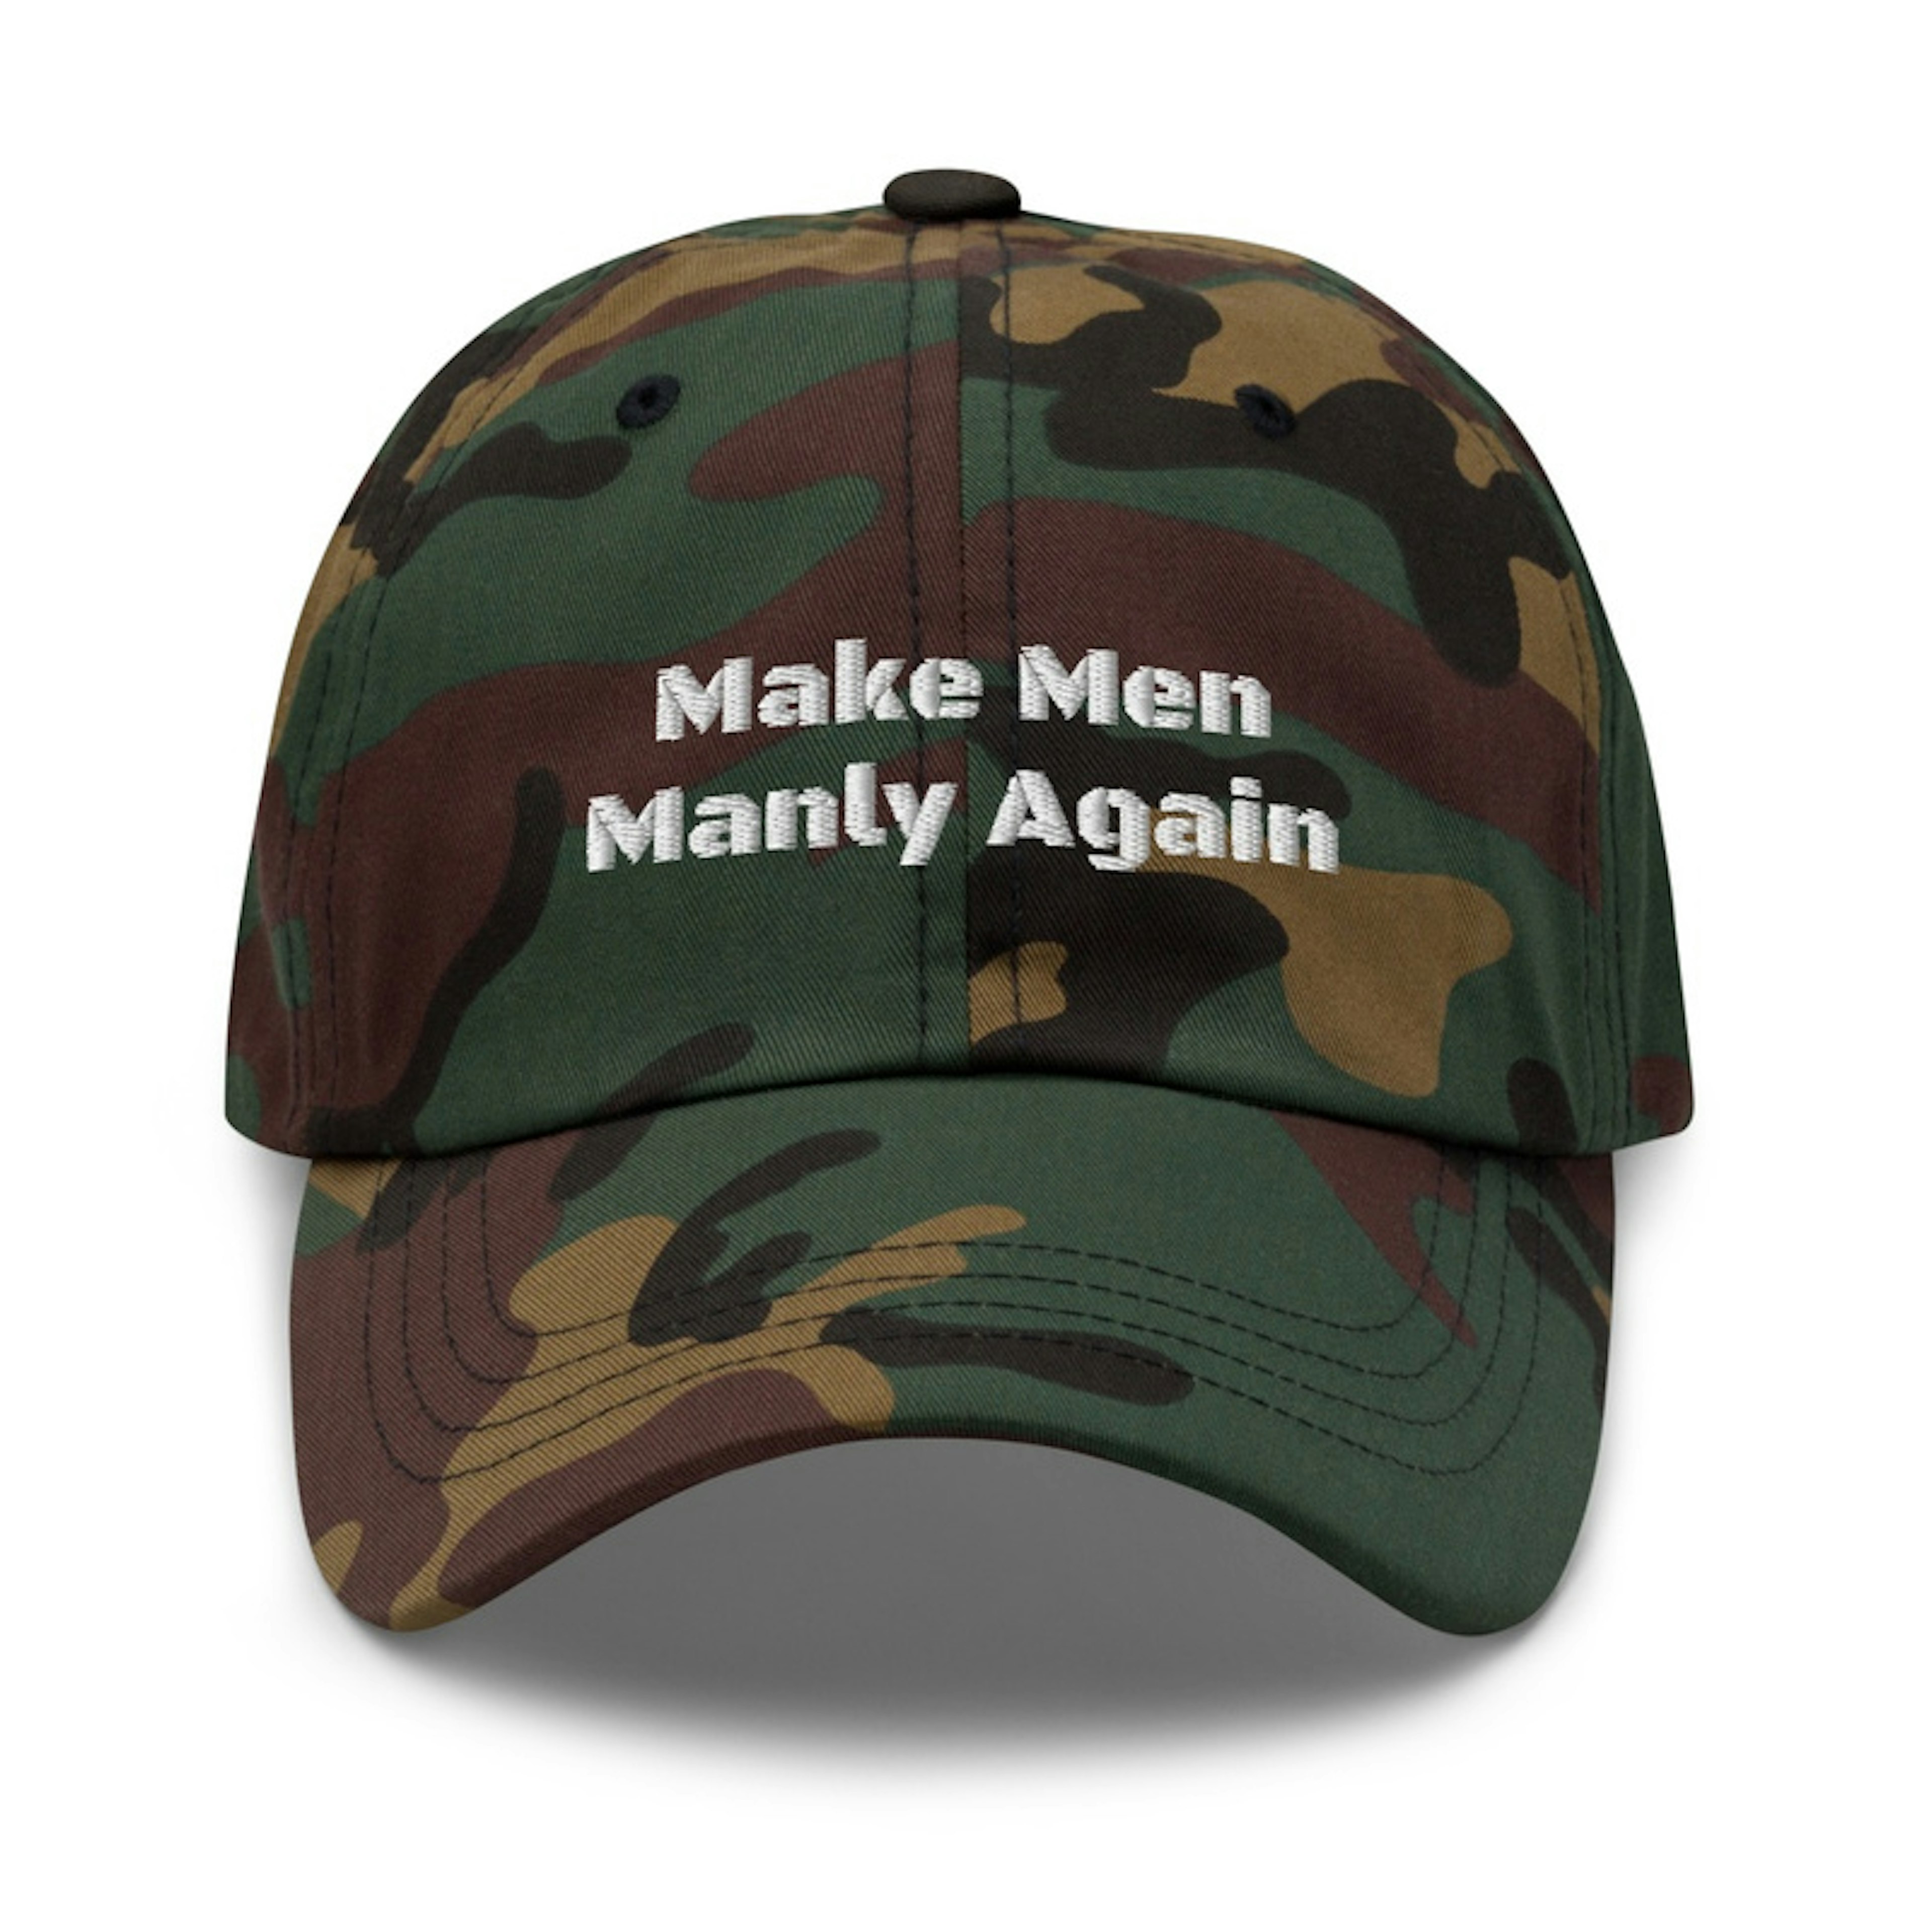 Make Men Manly Again